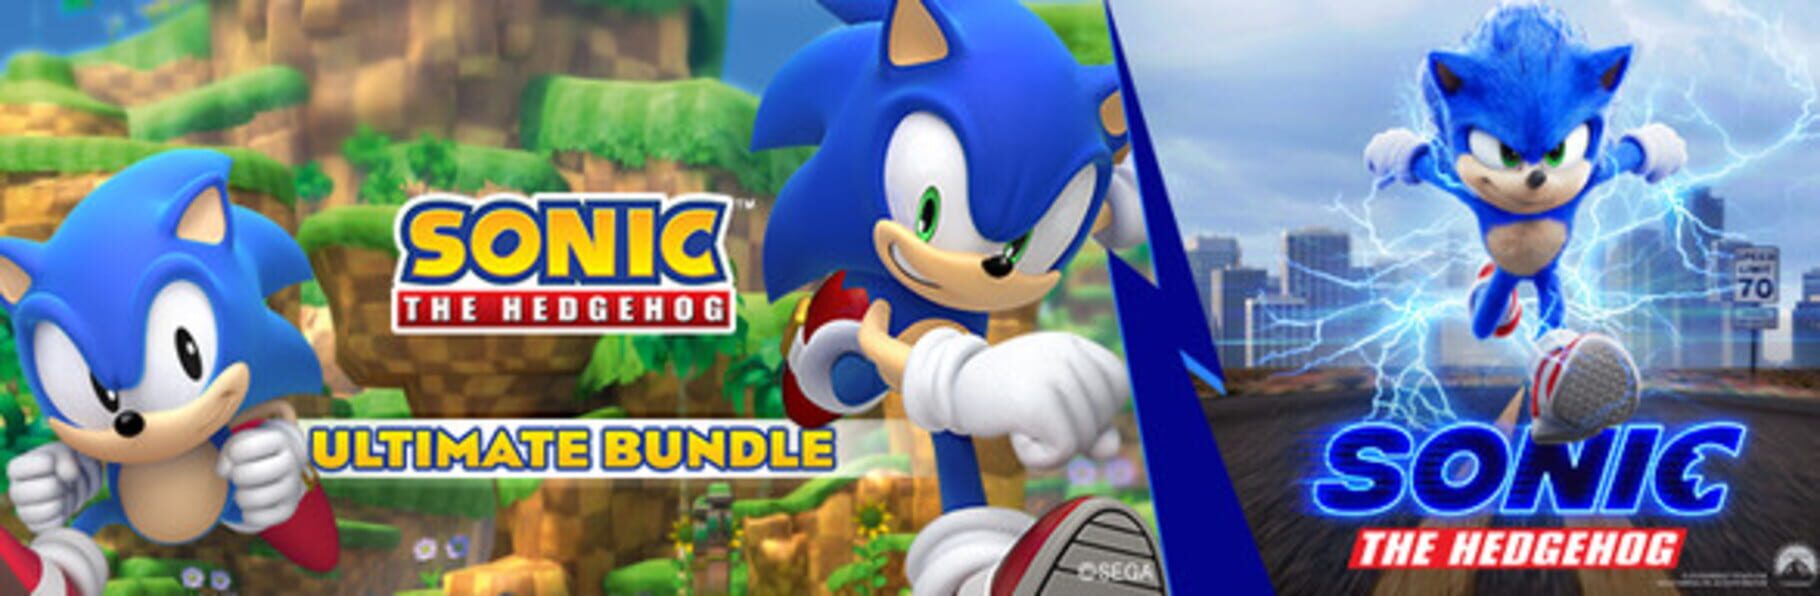 Sonic the Hedgehog: Ultimate Bundle Image